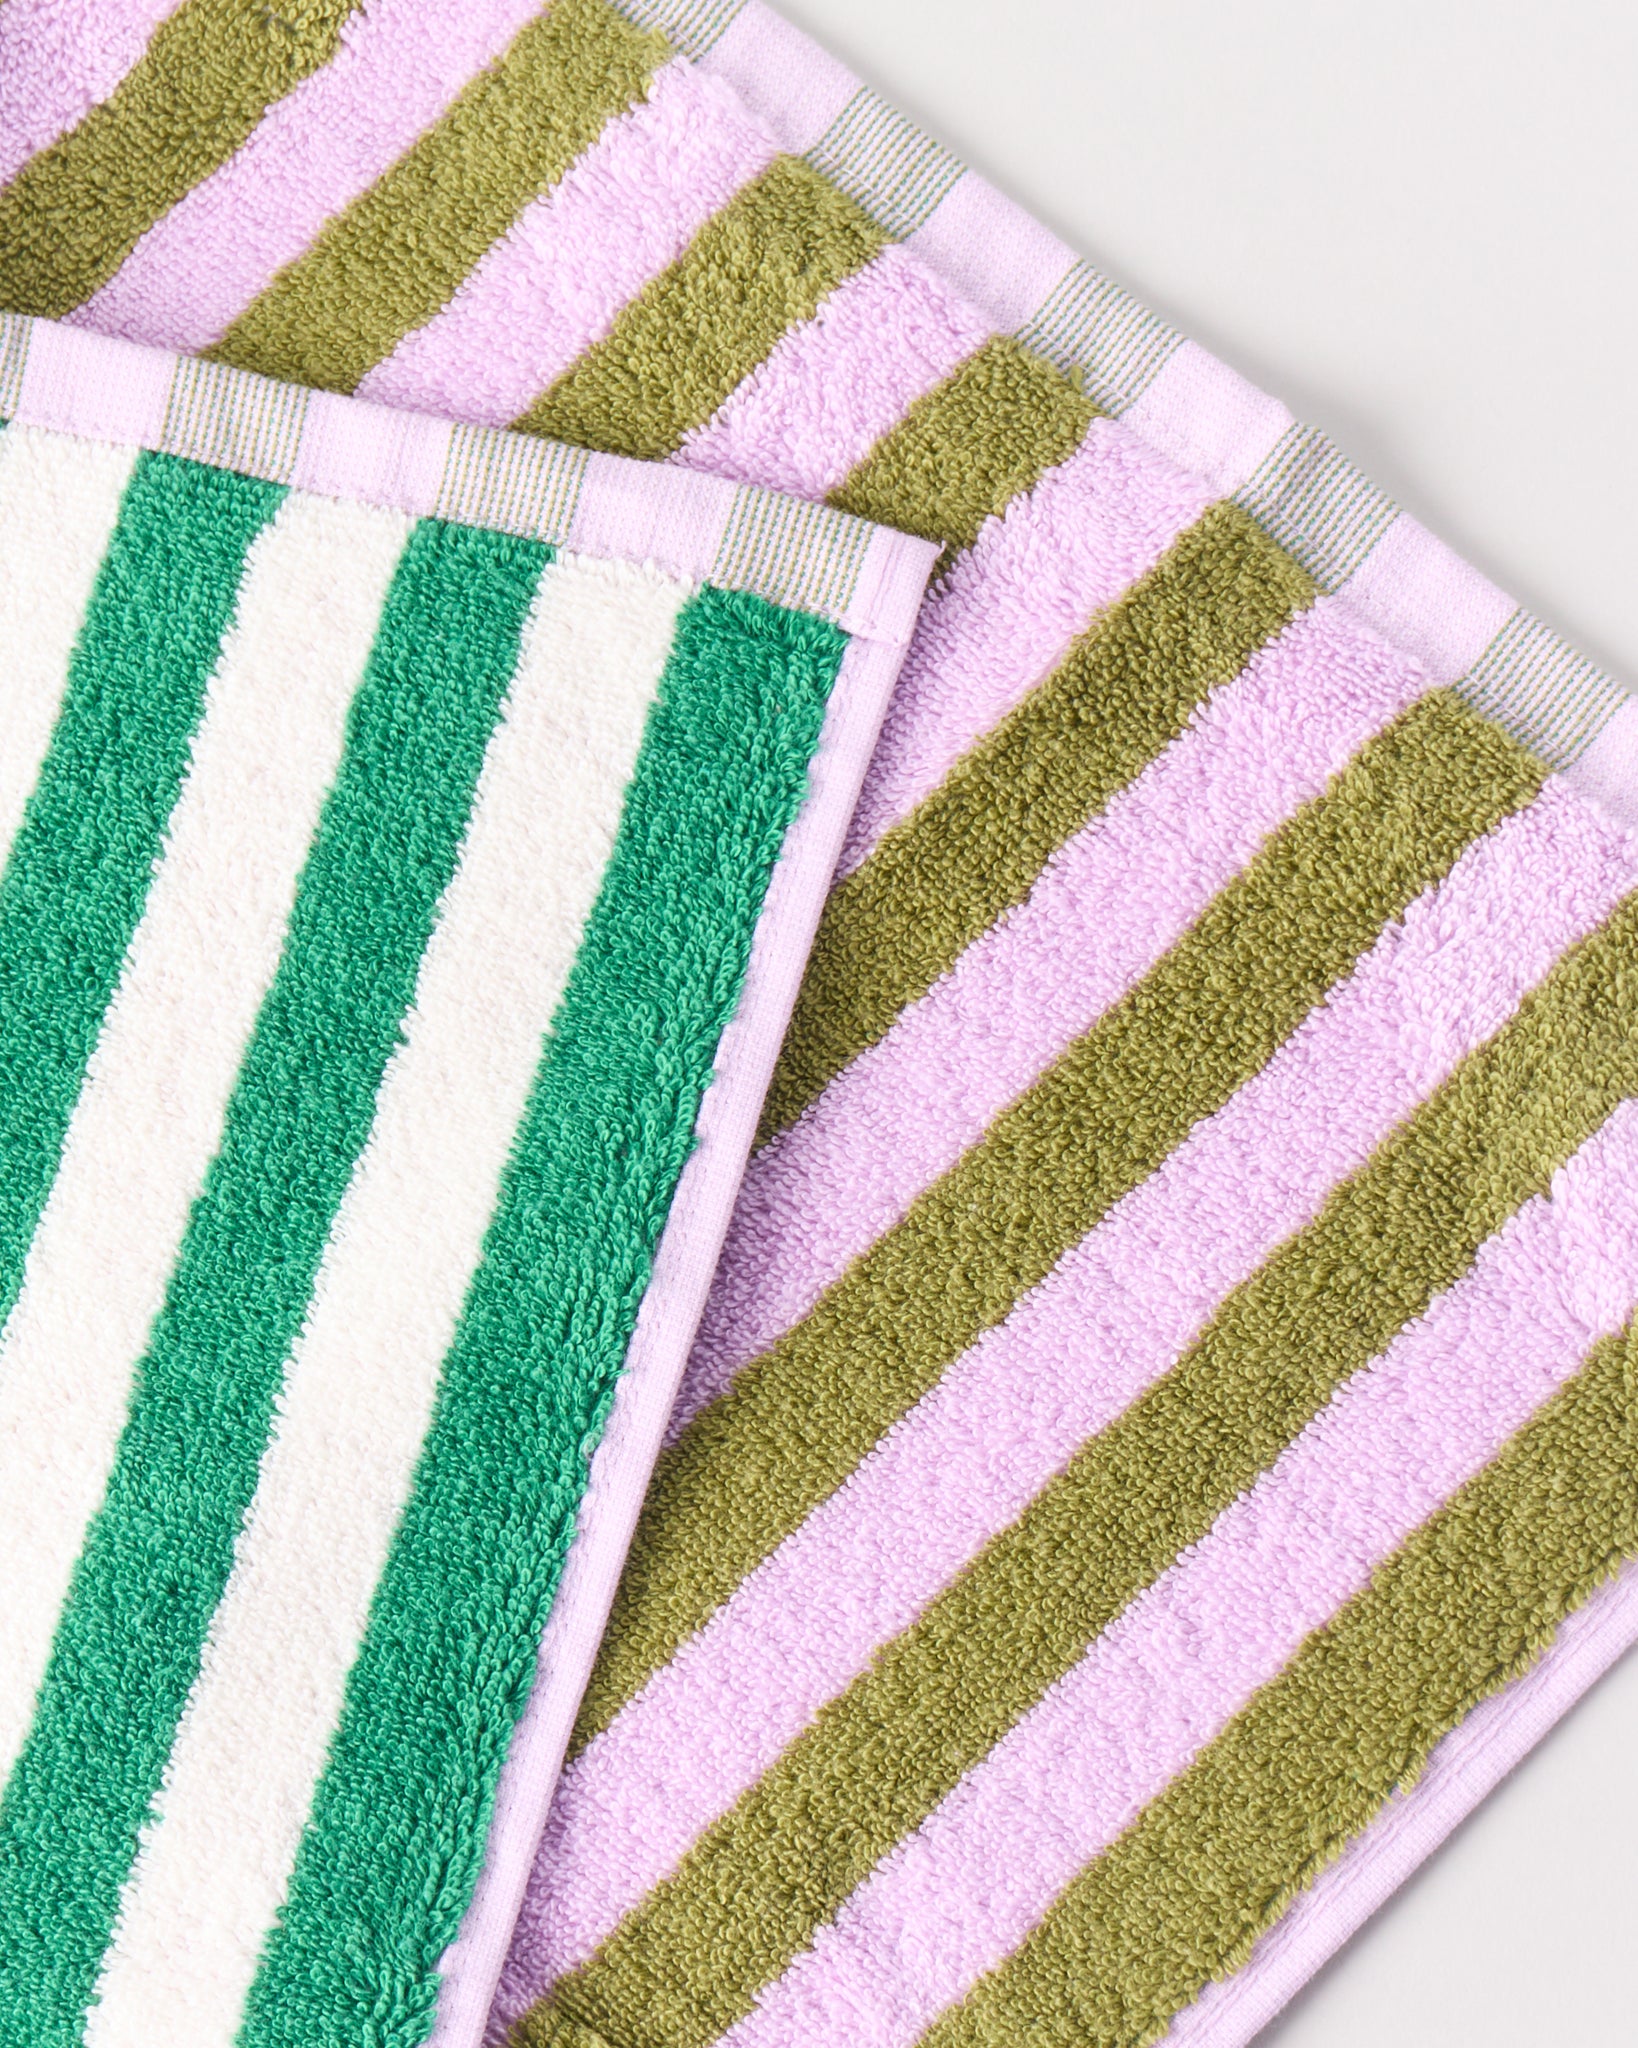 Earth Stripe Towels